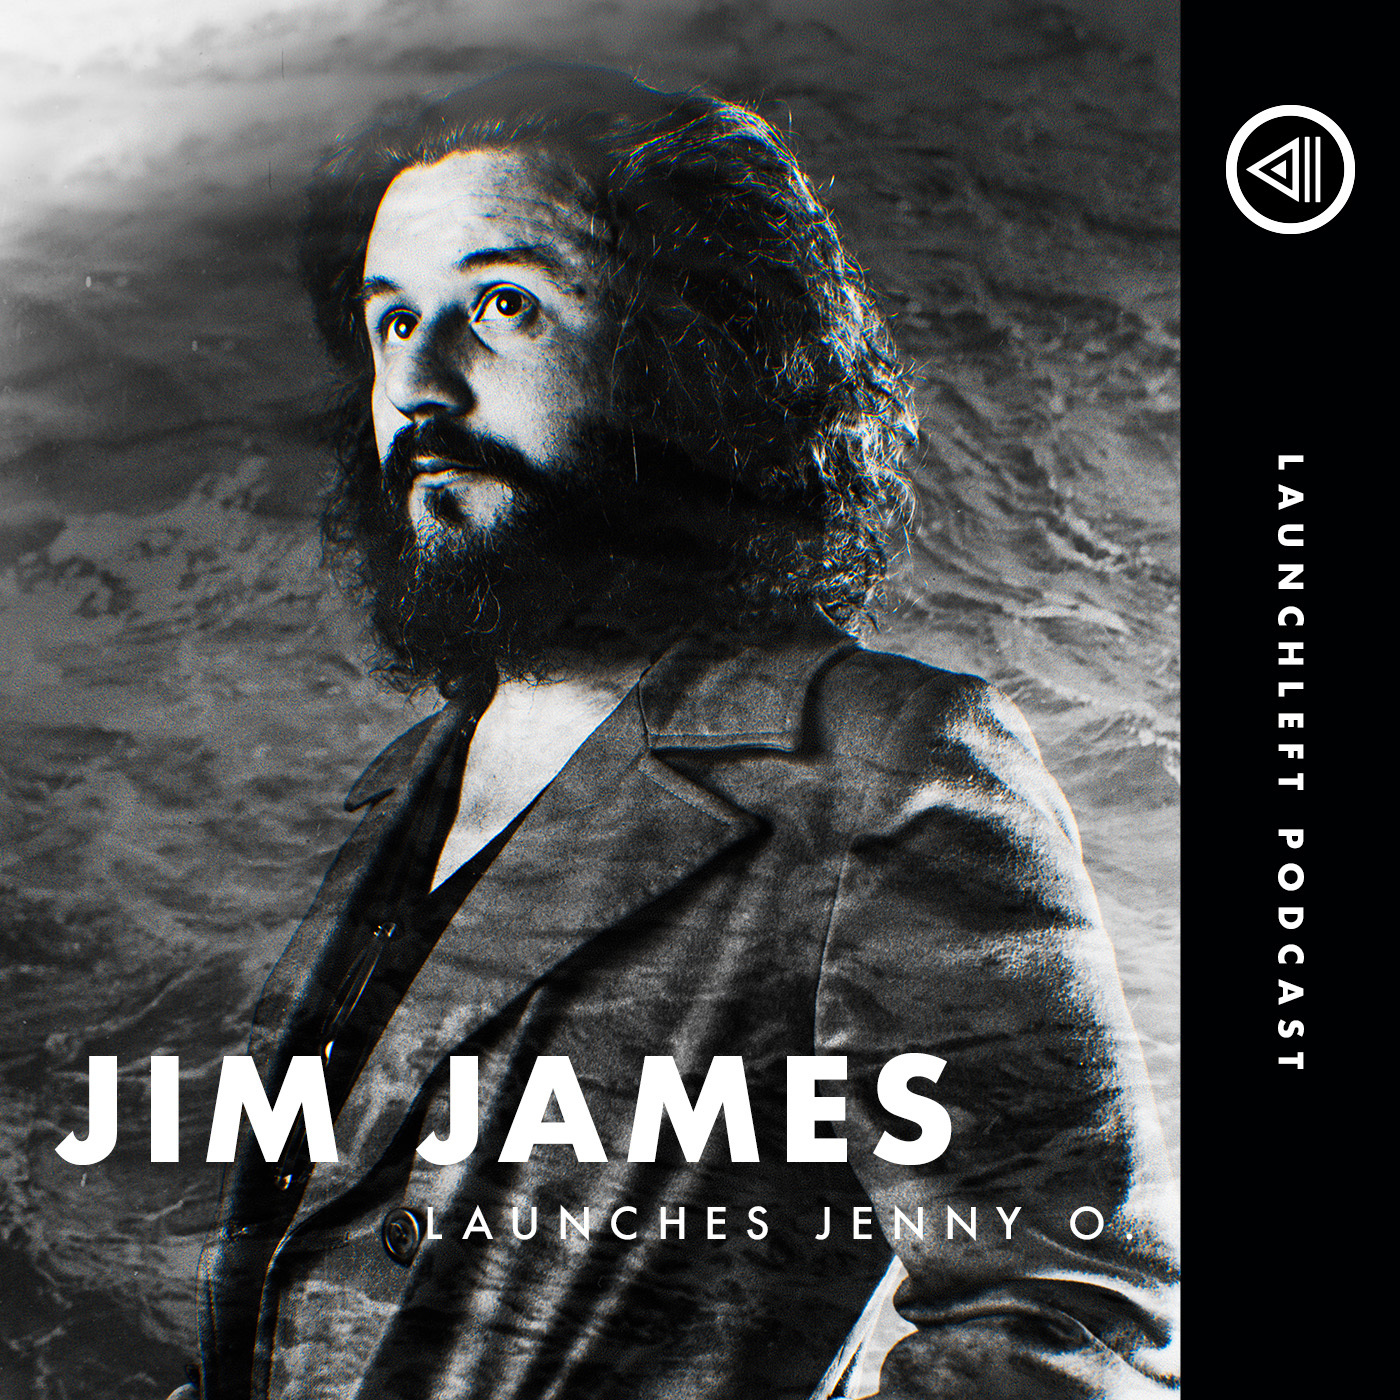 JIM JAMES launches Jenny O.